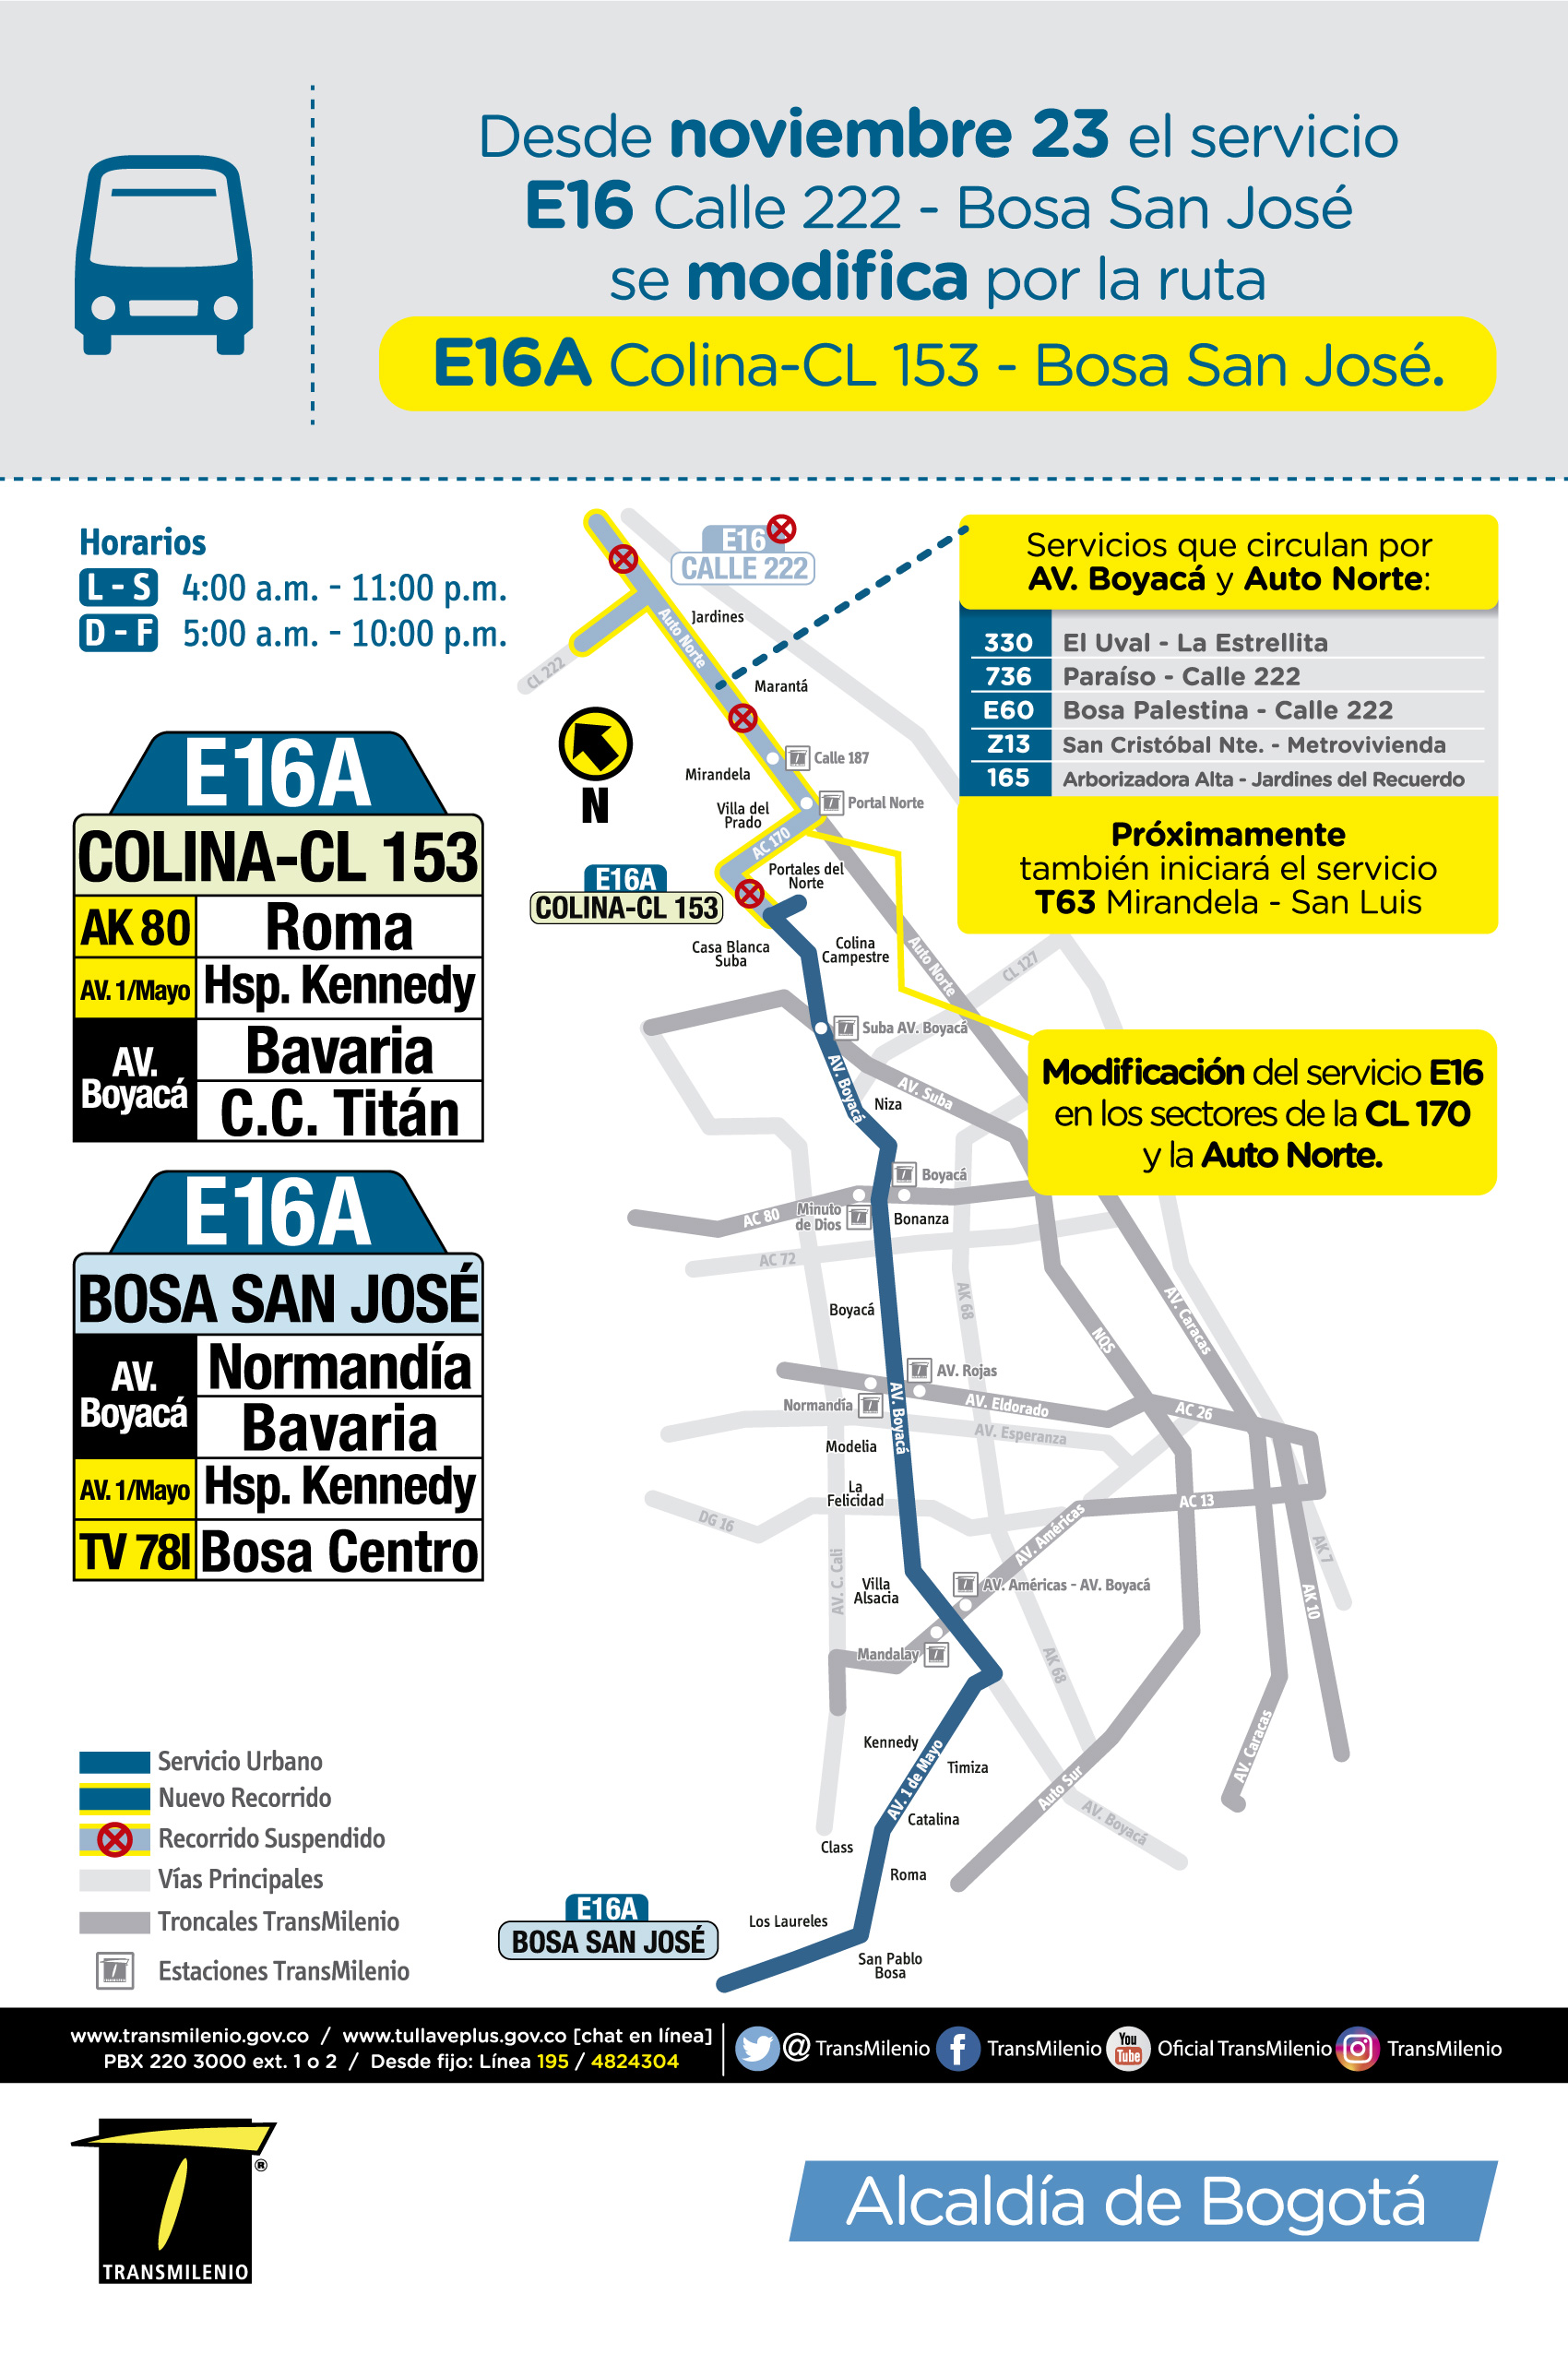 Mapa del nuevo recorrido de la ruta E16